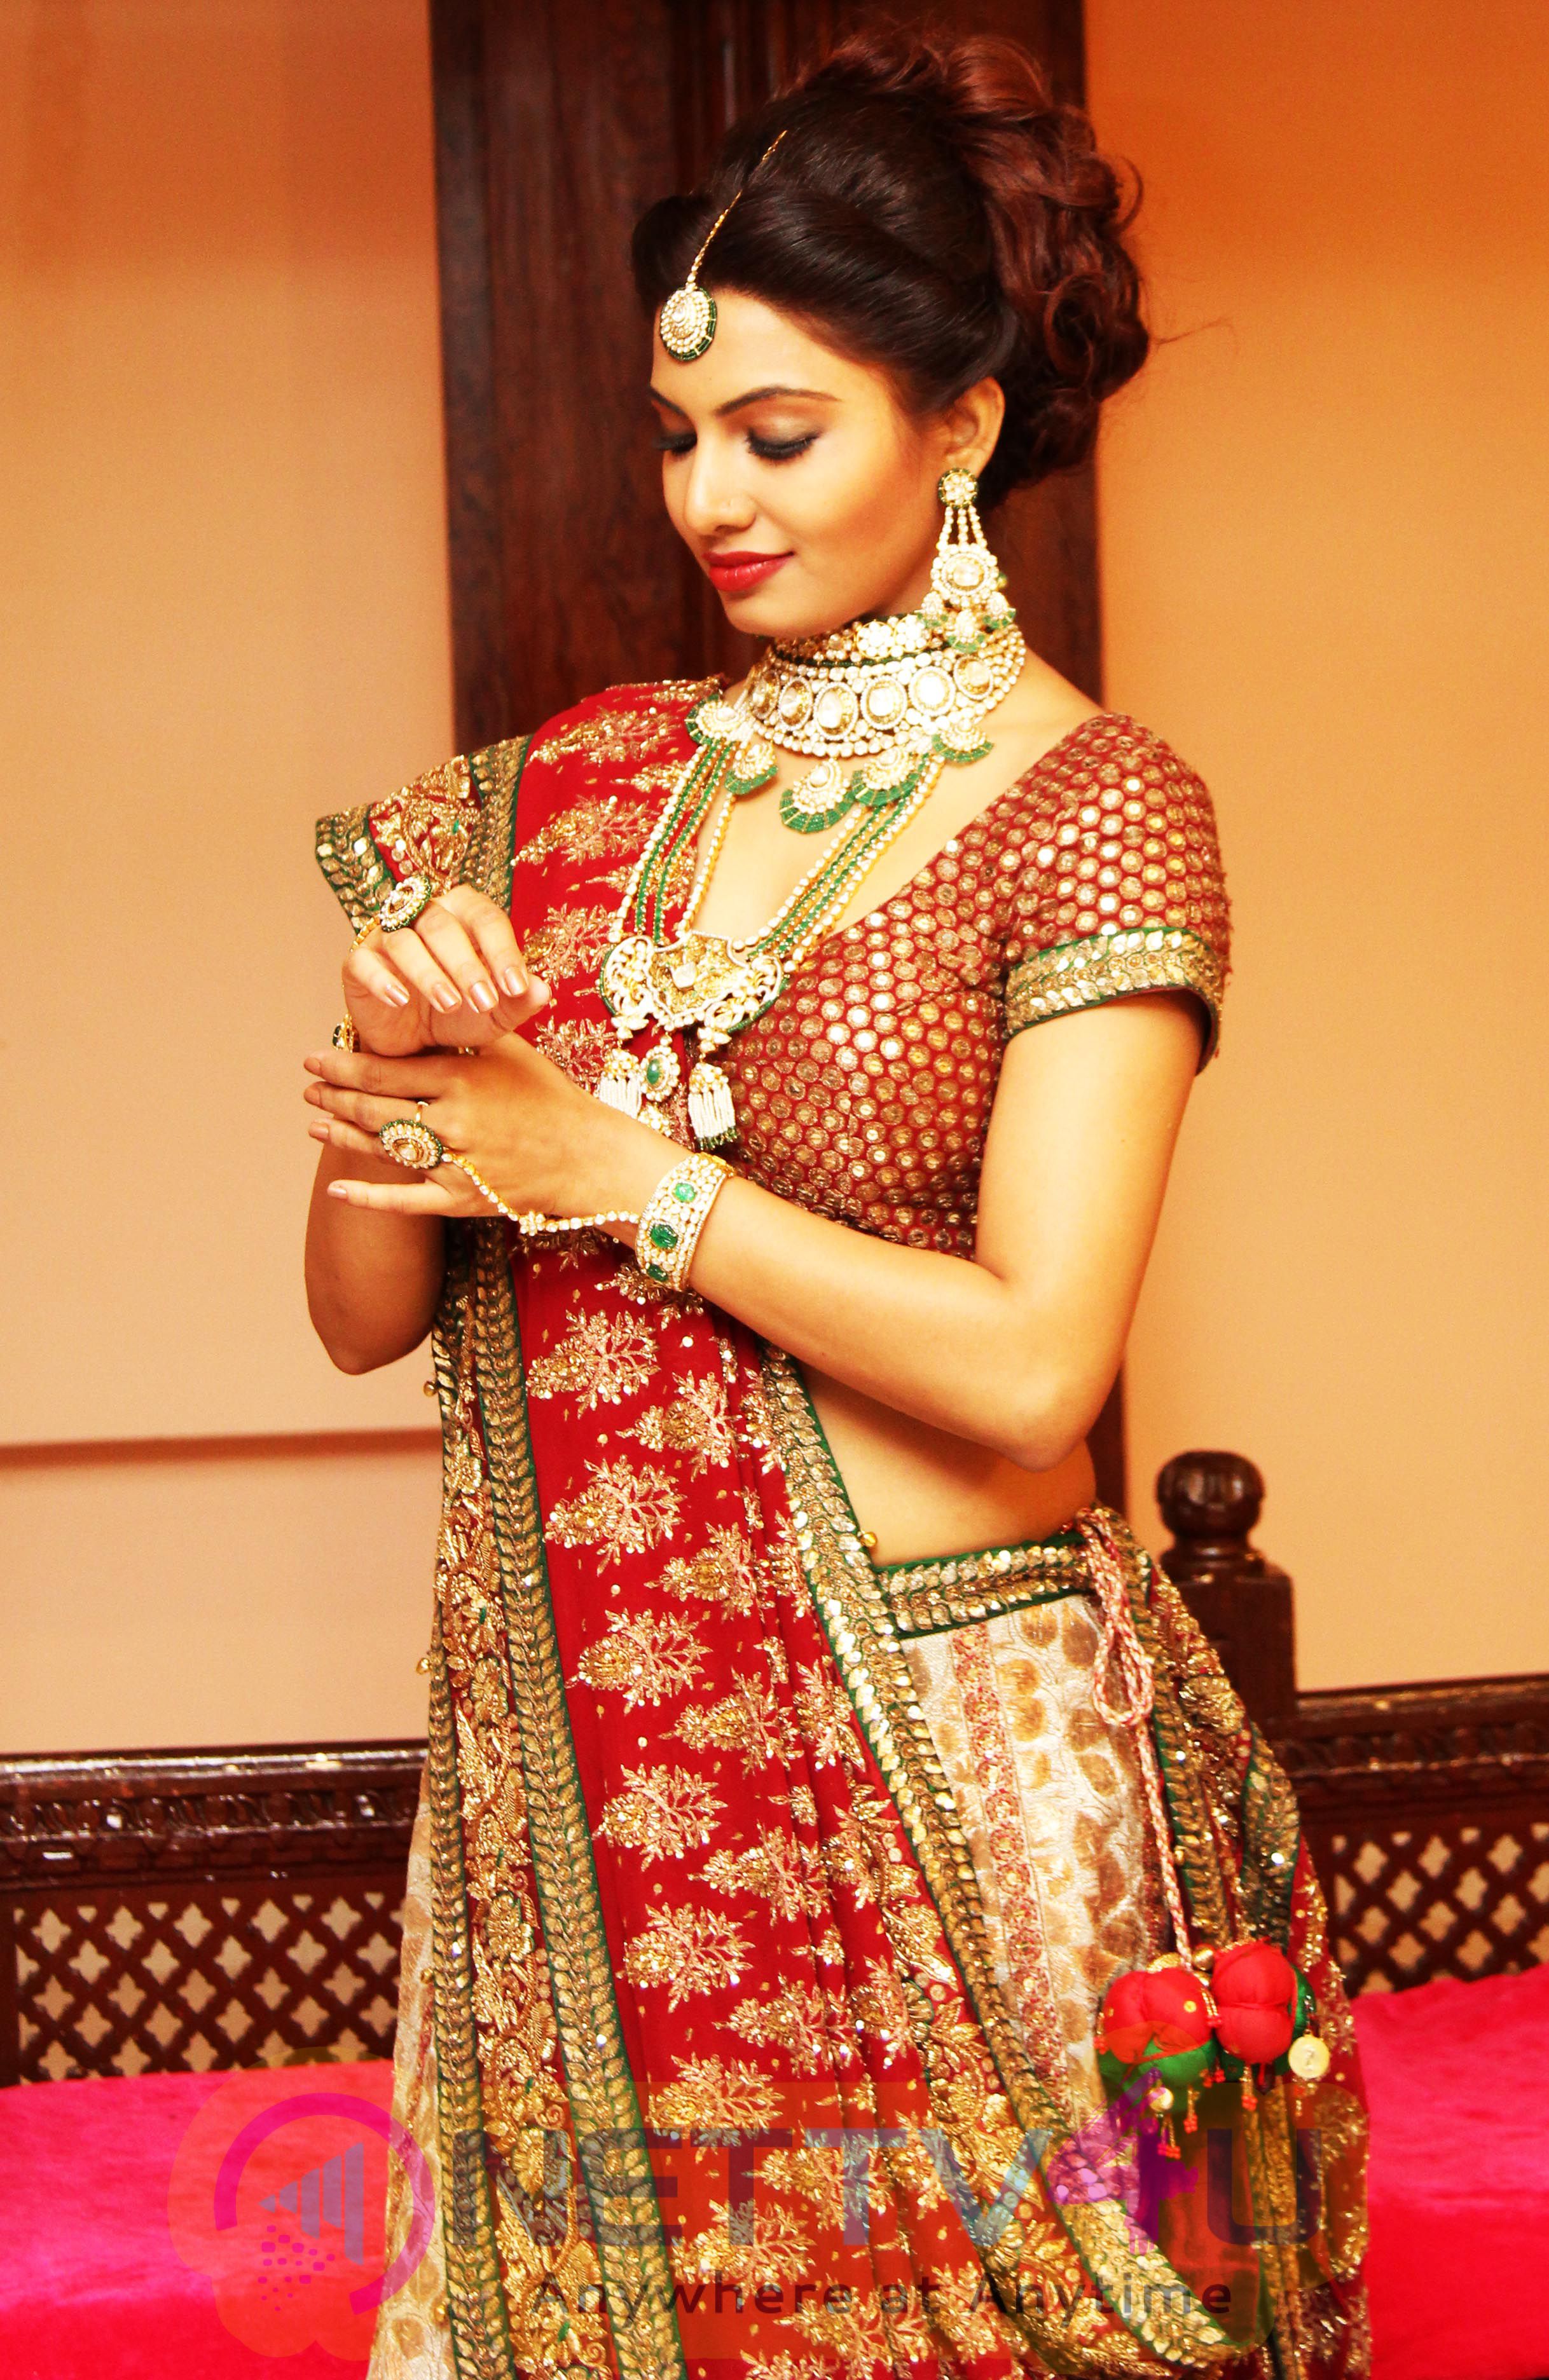 Avani Modi At Catalogue Shoot For Heritage Jewellery Brand Rodasi Stills Telugu Gallery